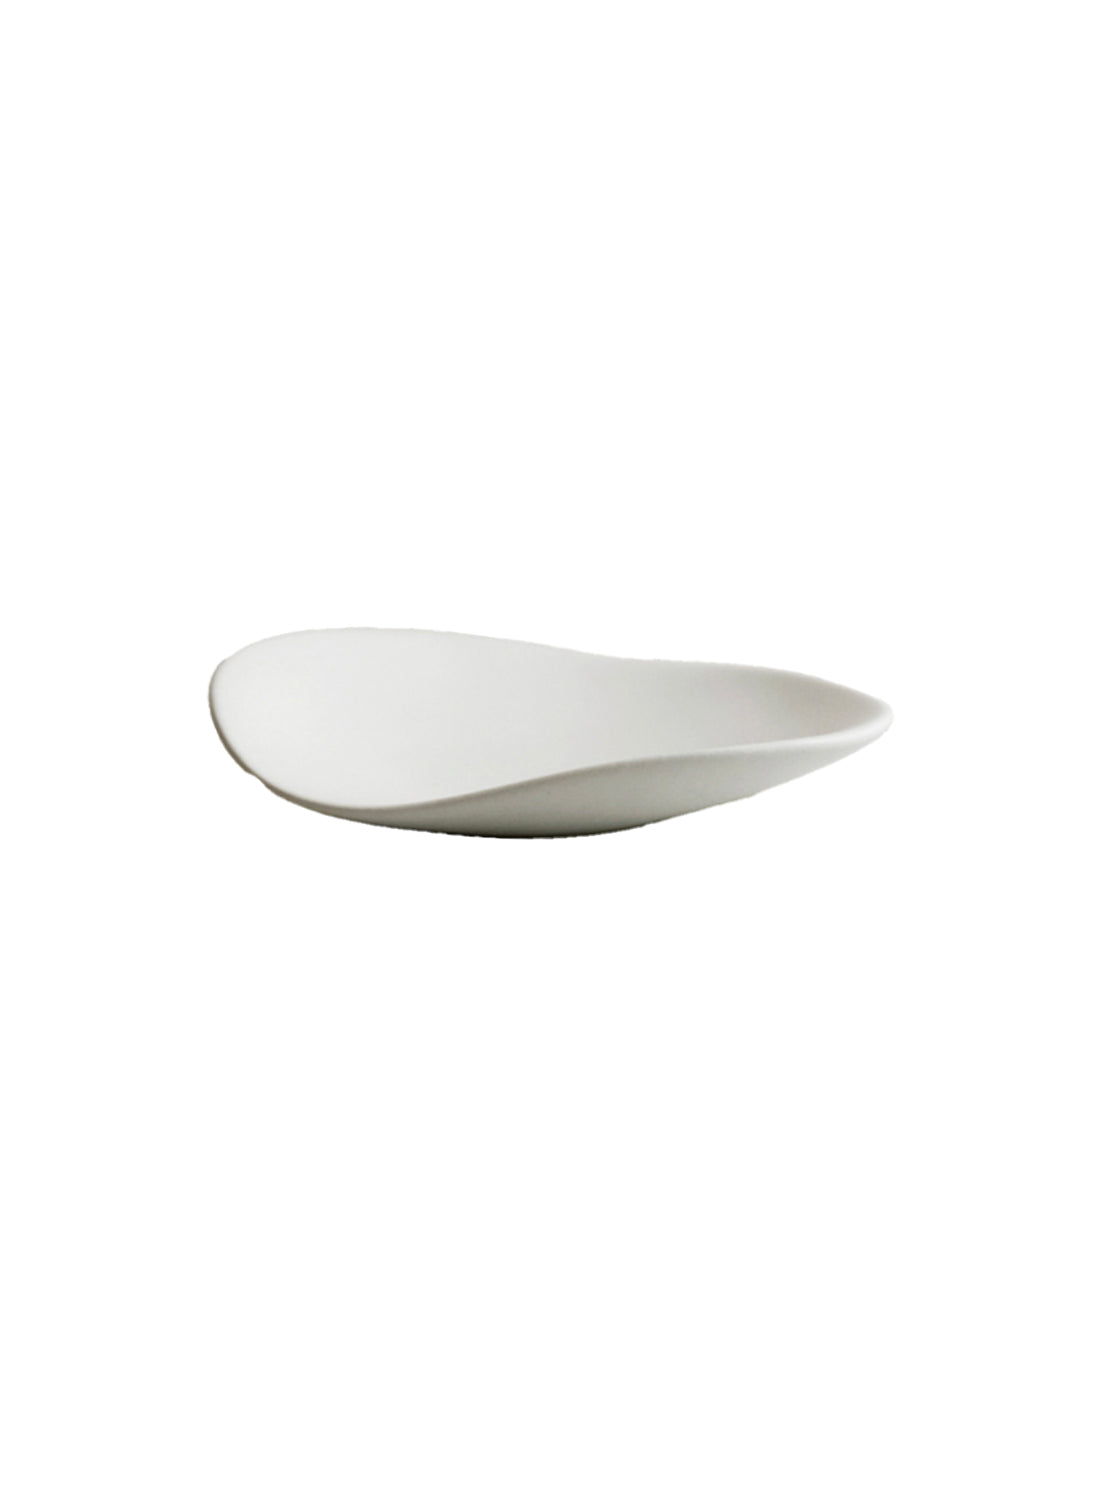 NR Ceramics Small Pebble Plate, stone white